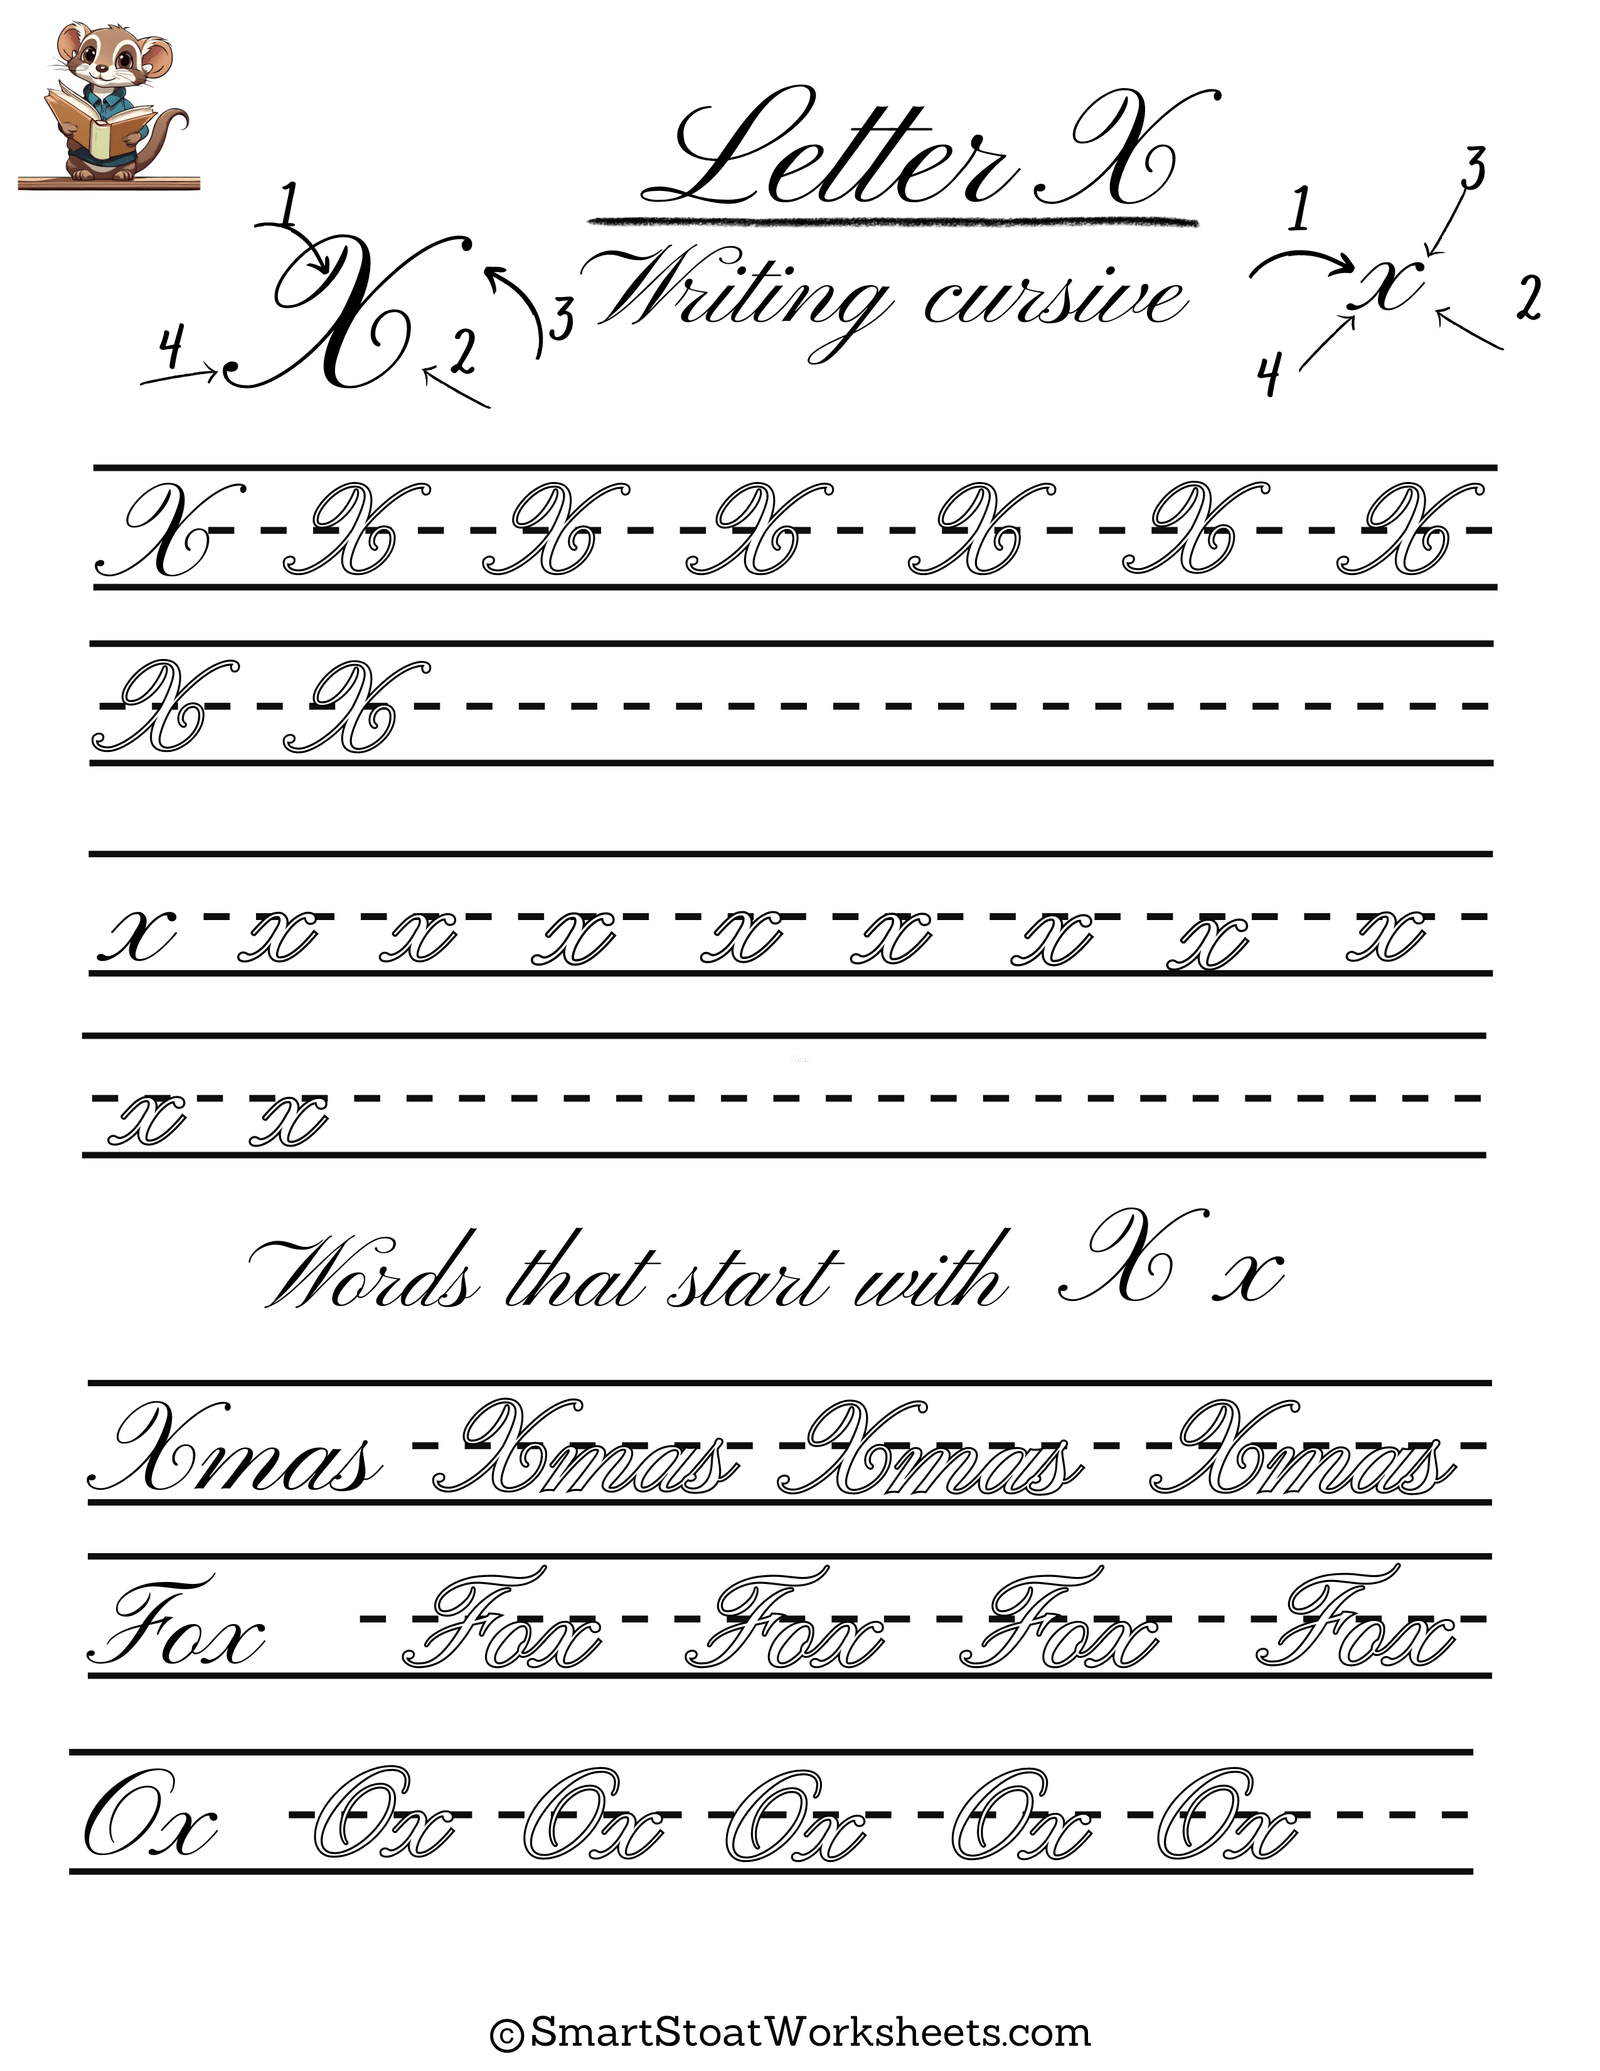 Letter X Cursive Handwriting